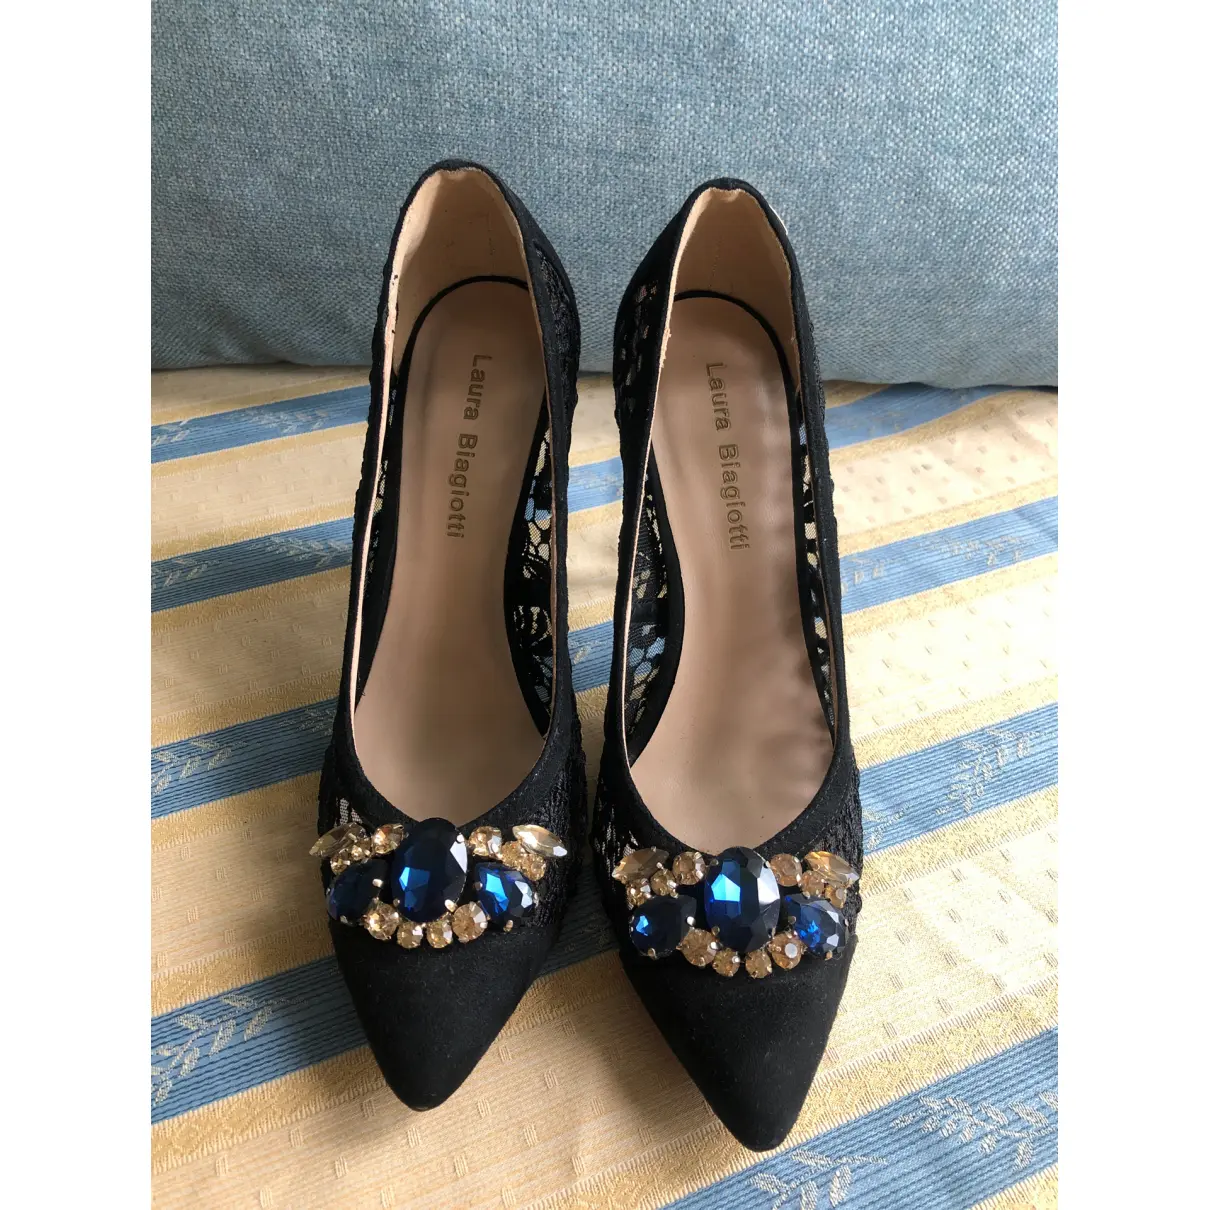 Buy LAURA BIAGIOTTI Velvet heels online